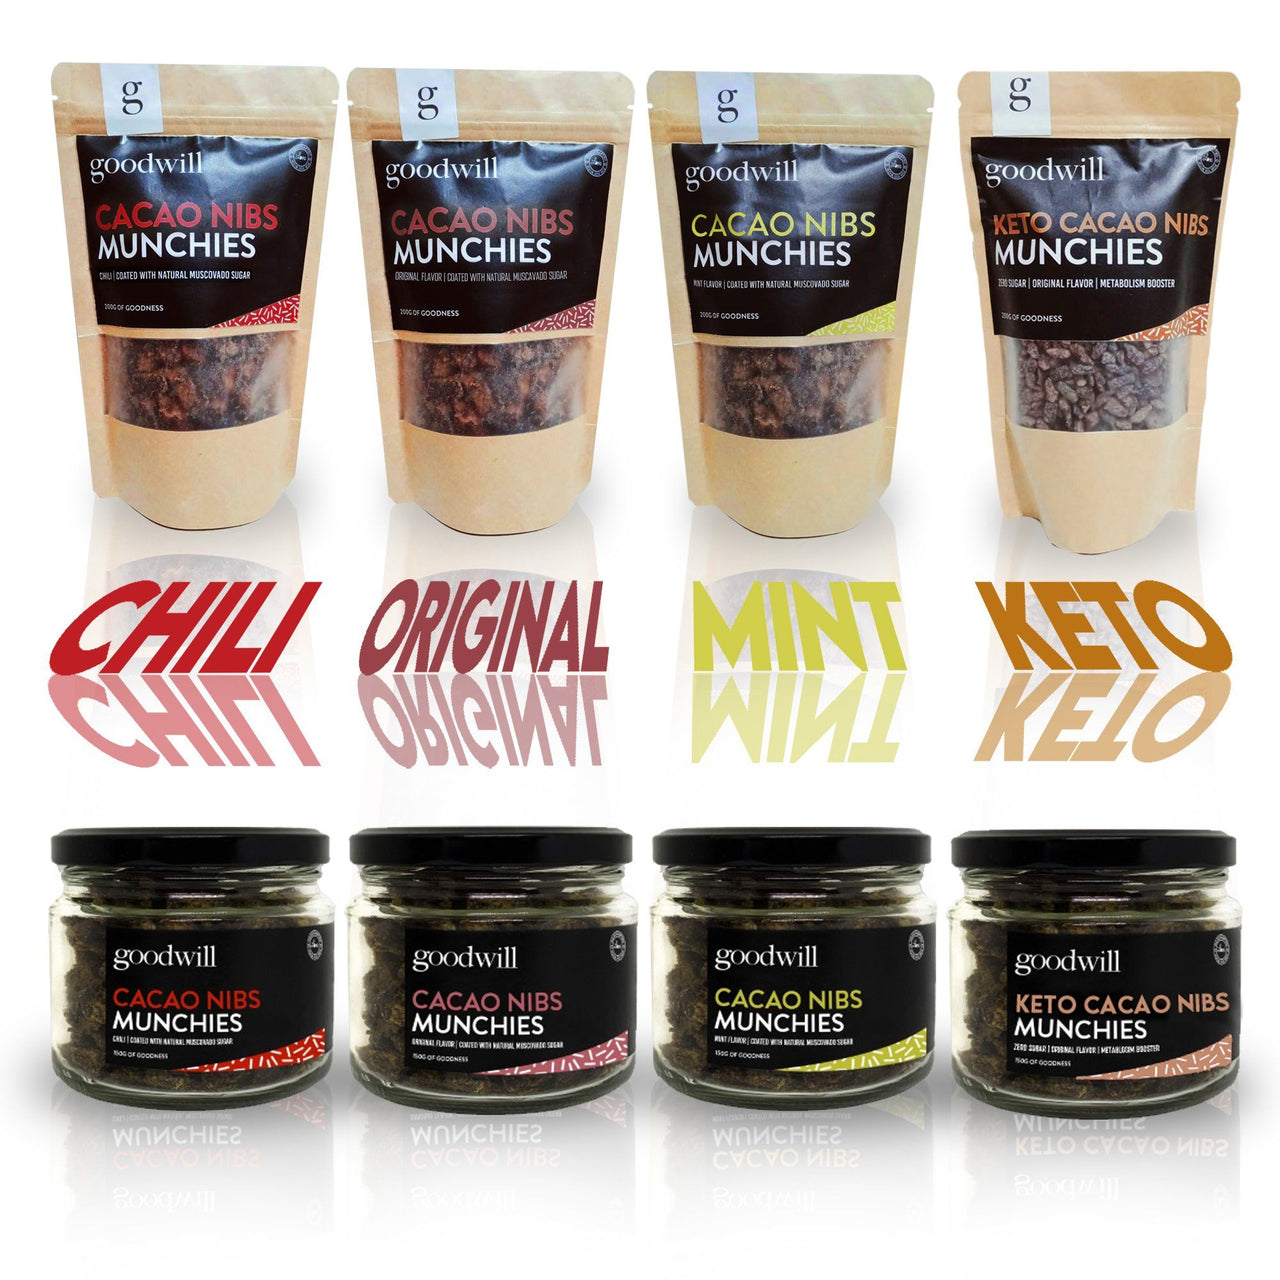 Goodwill 100% Organic Cacao Nibs Munchies (Jar) Chocolate Goodwill 